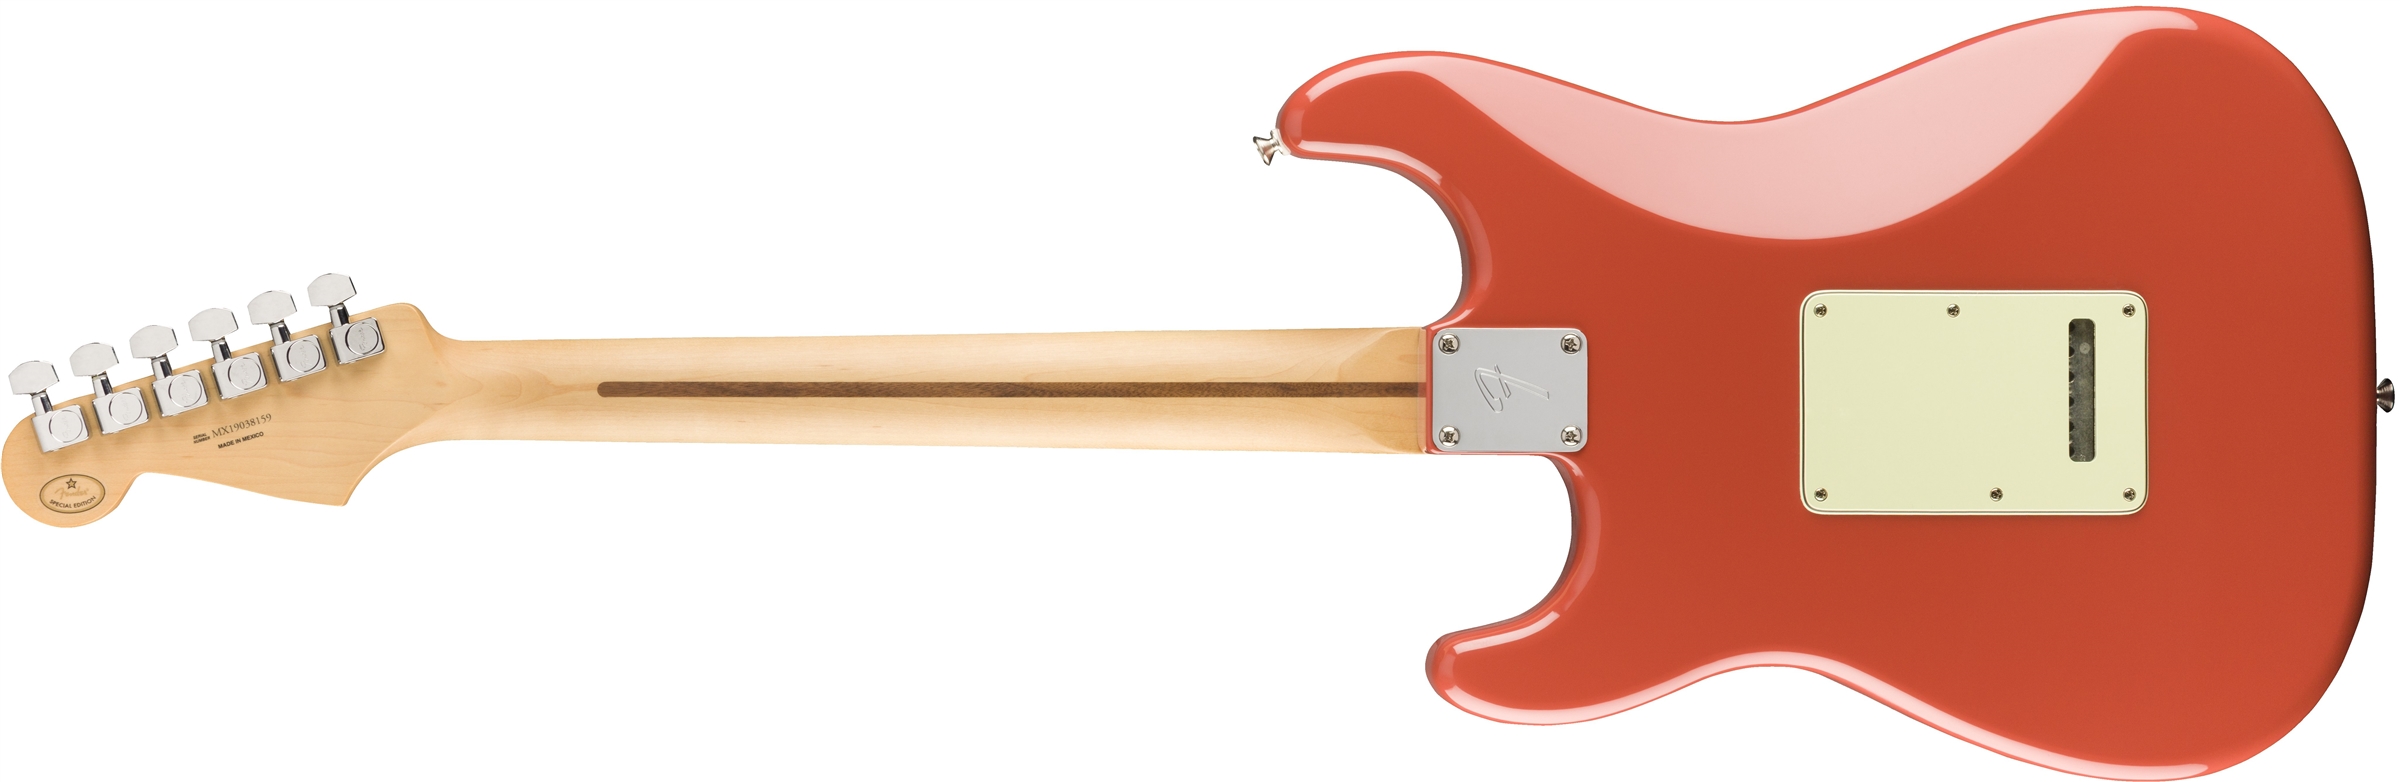 Fender Strat Player Ltd Mex 3s Trem Pf - Fiesta Red - Guitarra eléctrica con forma de str. - Variation 1